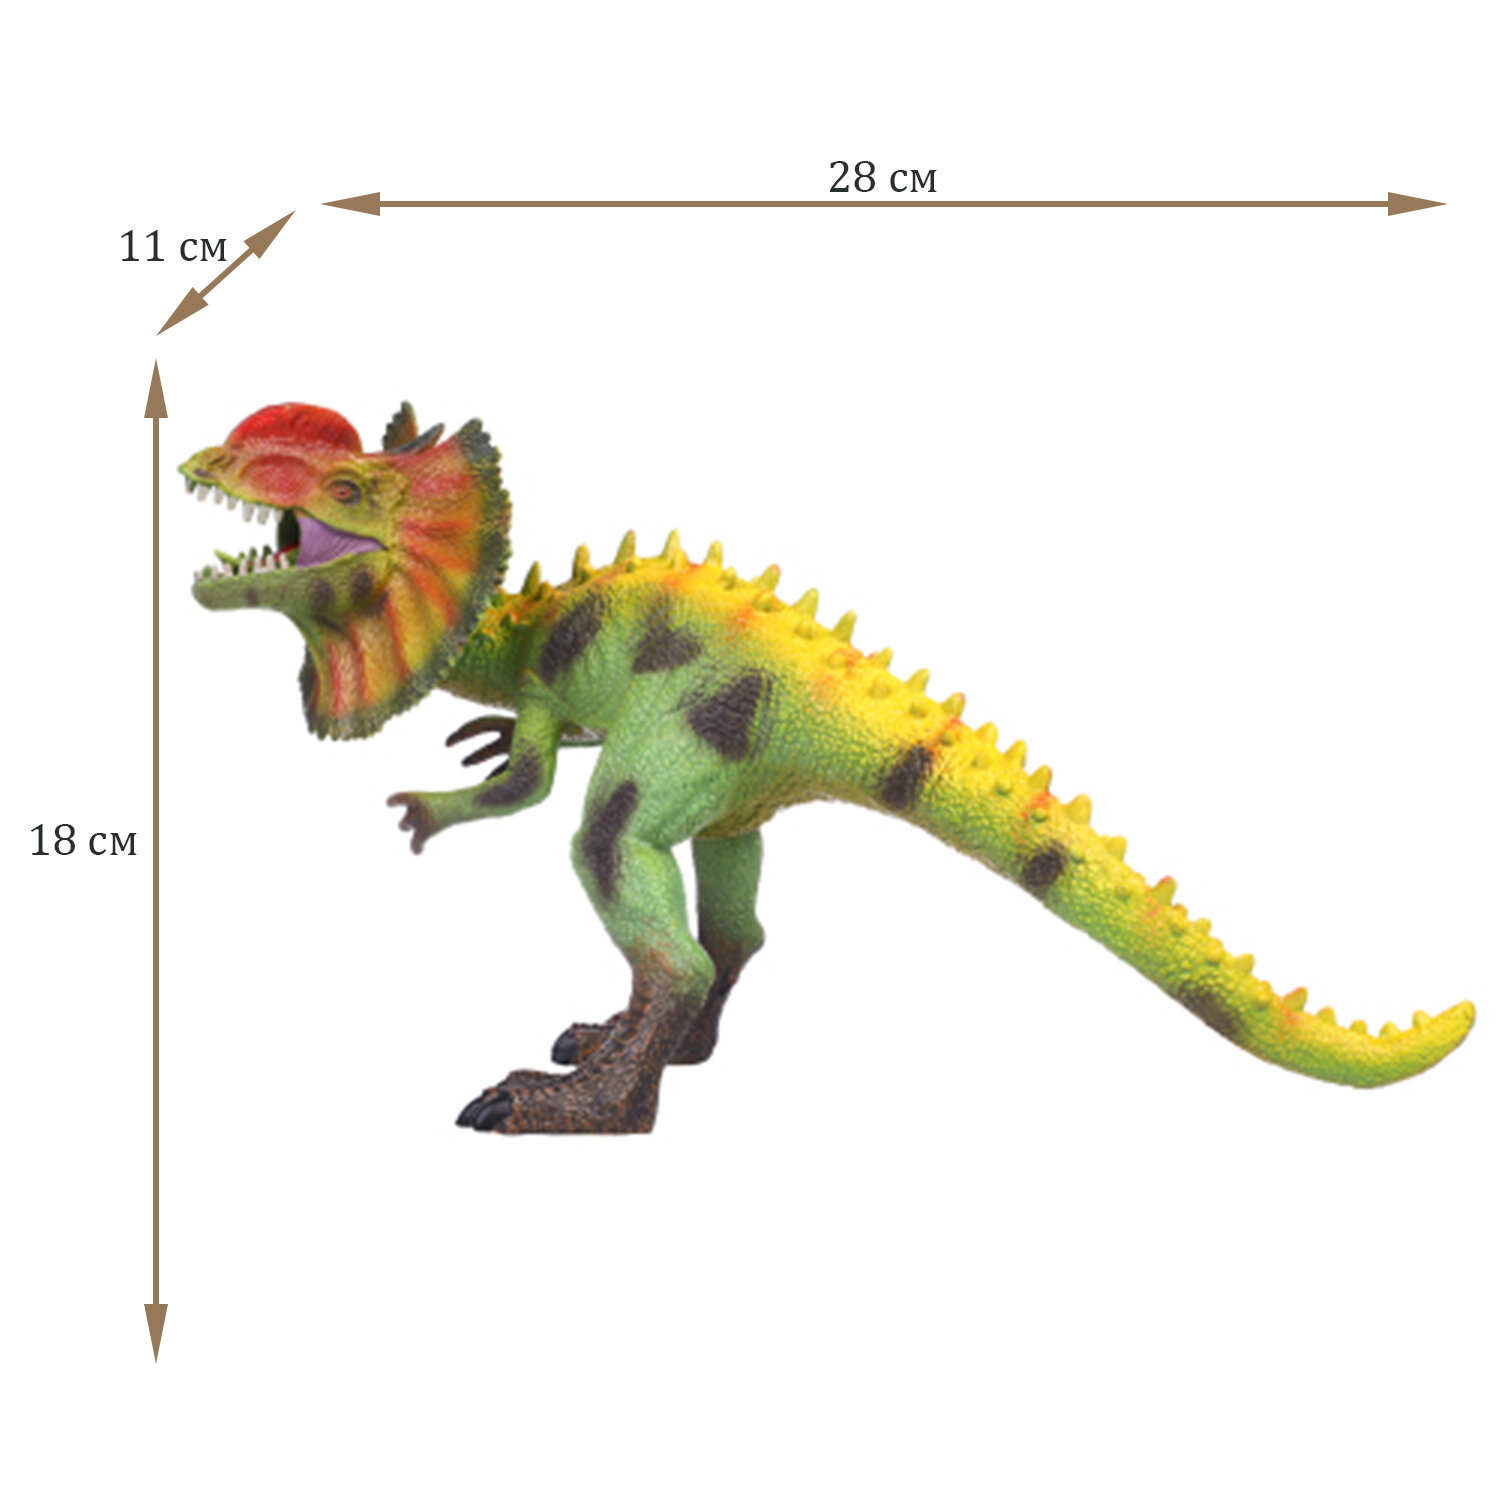 Игрушка динозавр серии "Мир динозавров" - Фигурка Дилофозавр